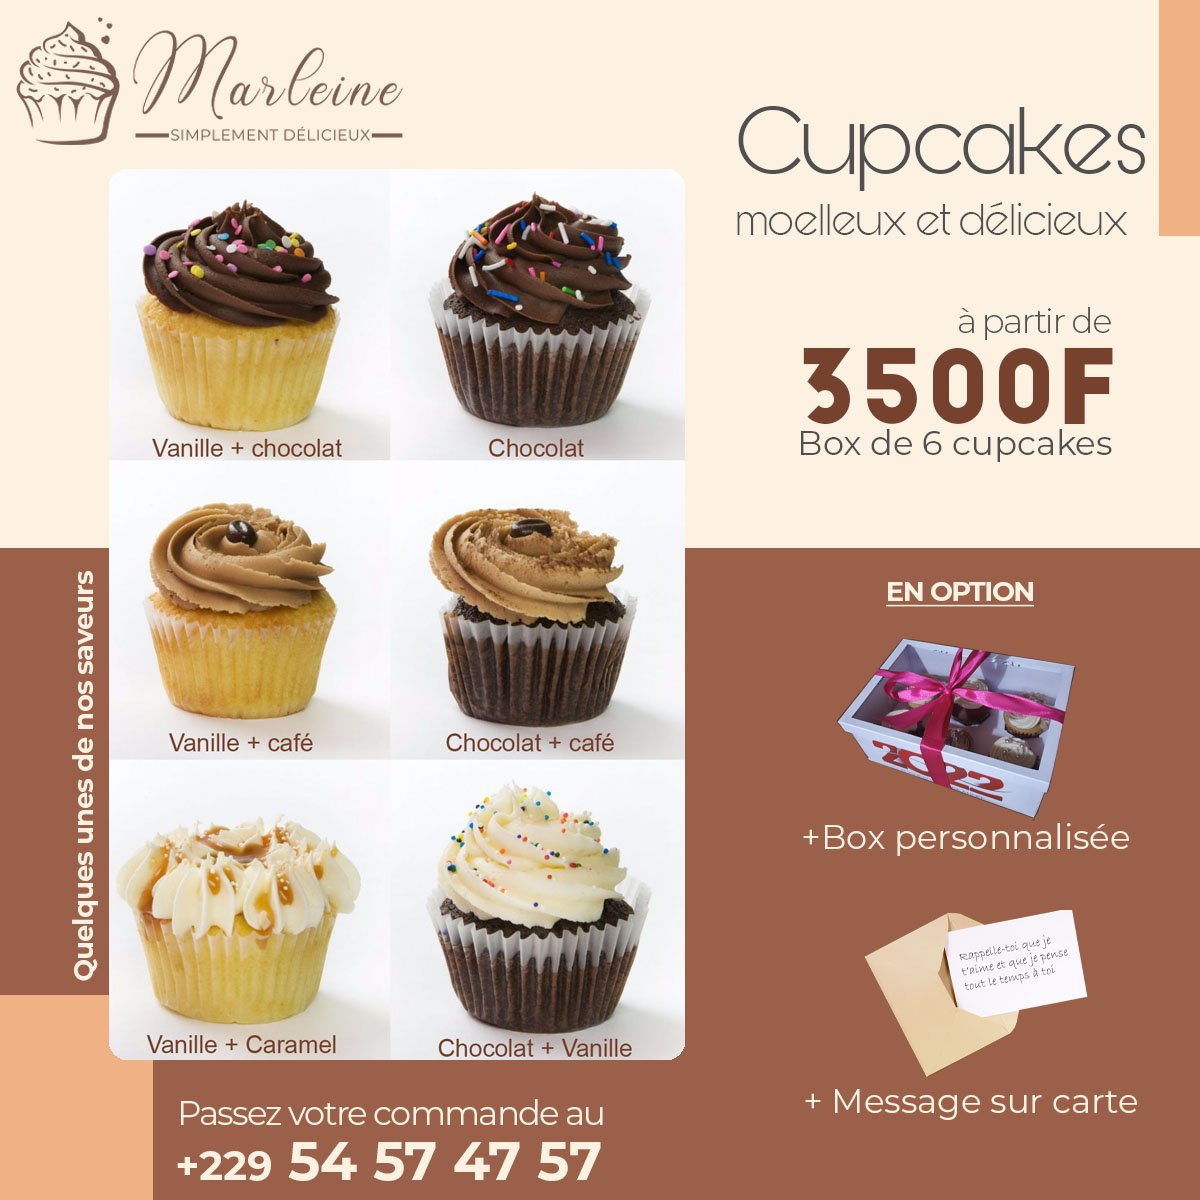 Cupcakes Marleine